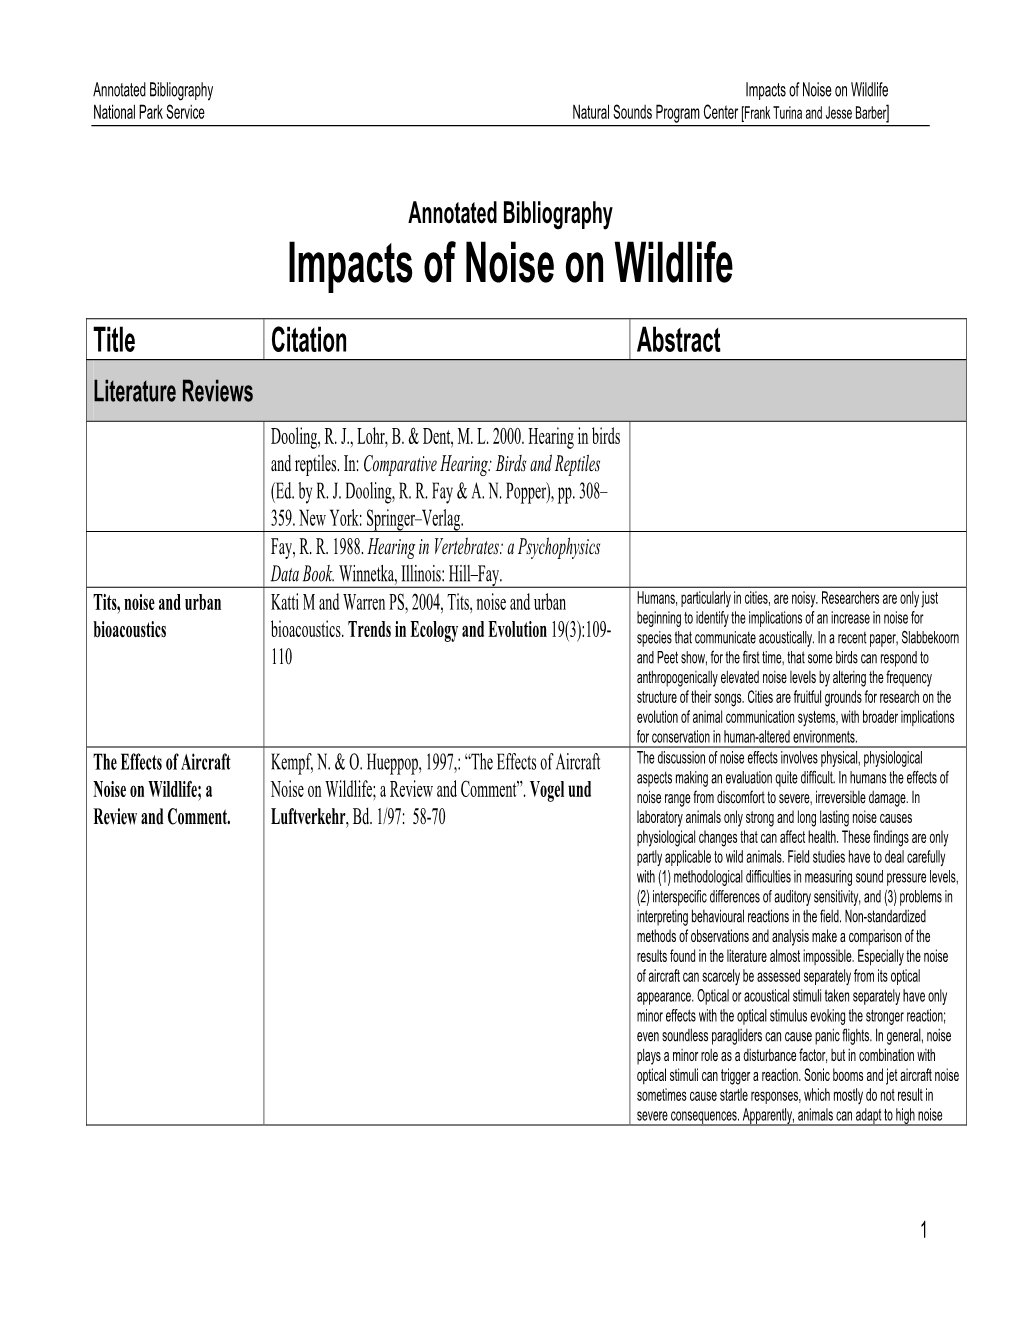 Impacts of Noise on Wildlife National Park Service Natural Sounds Program Center [Frank Turina and Jesse Barber]